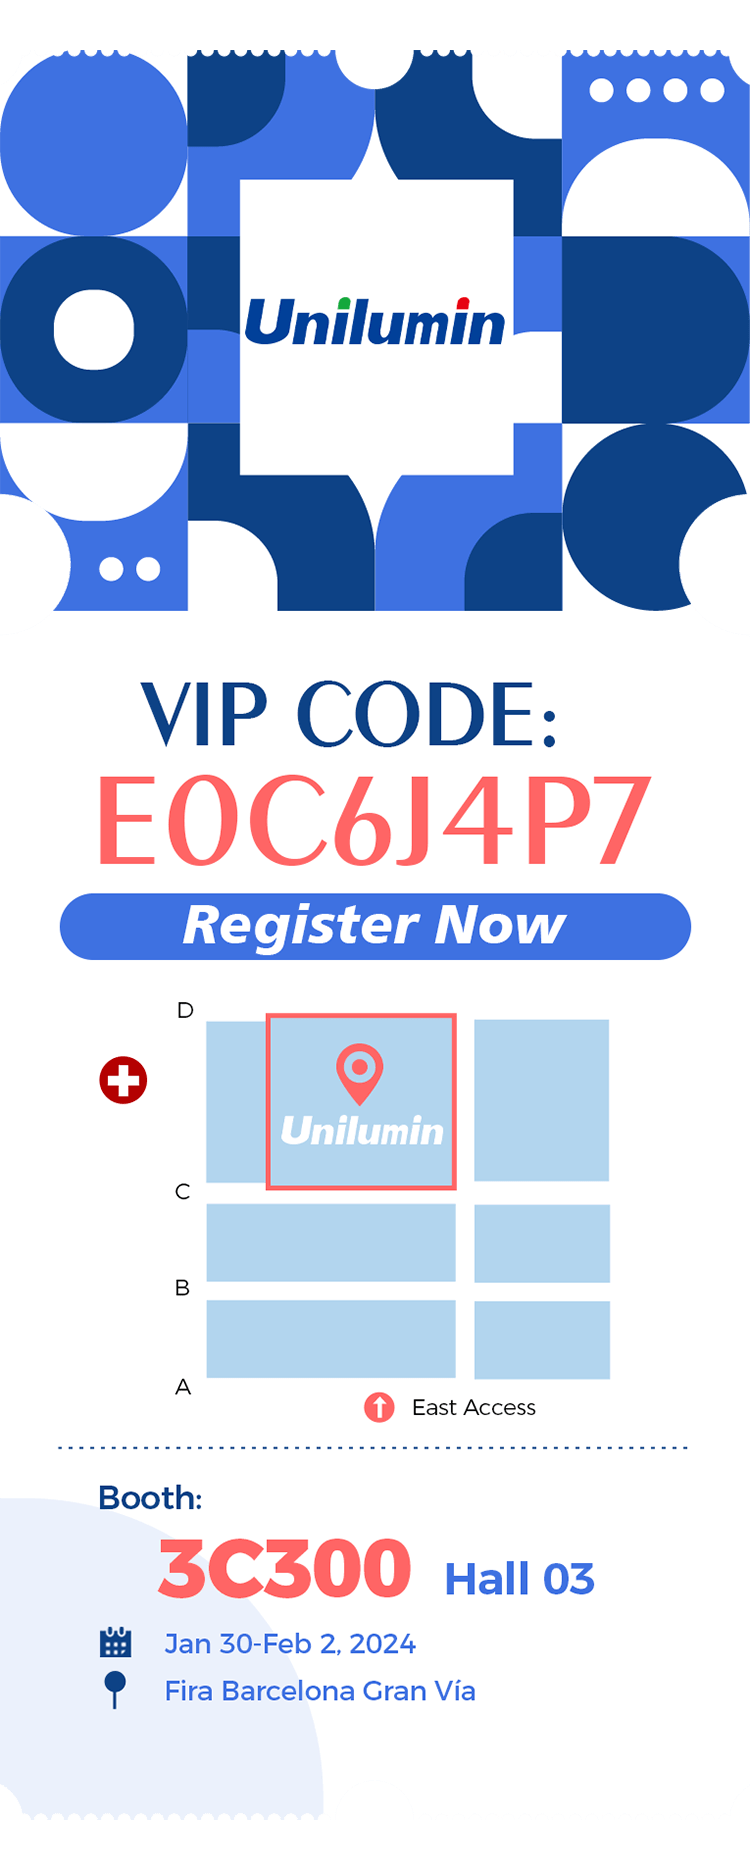 VIP CODE: E0C6J4P7